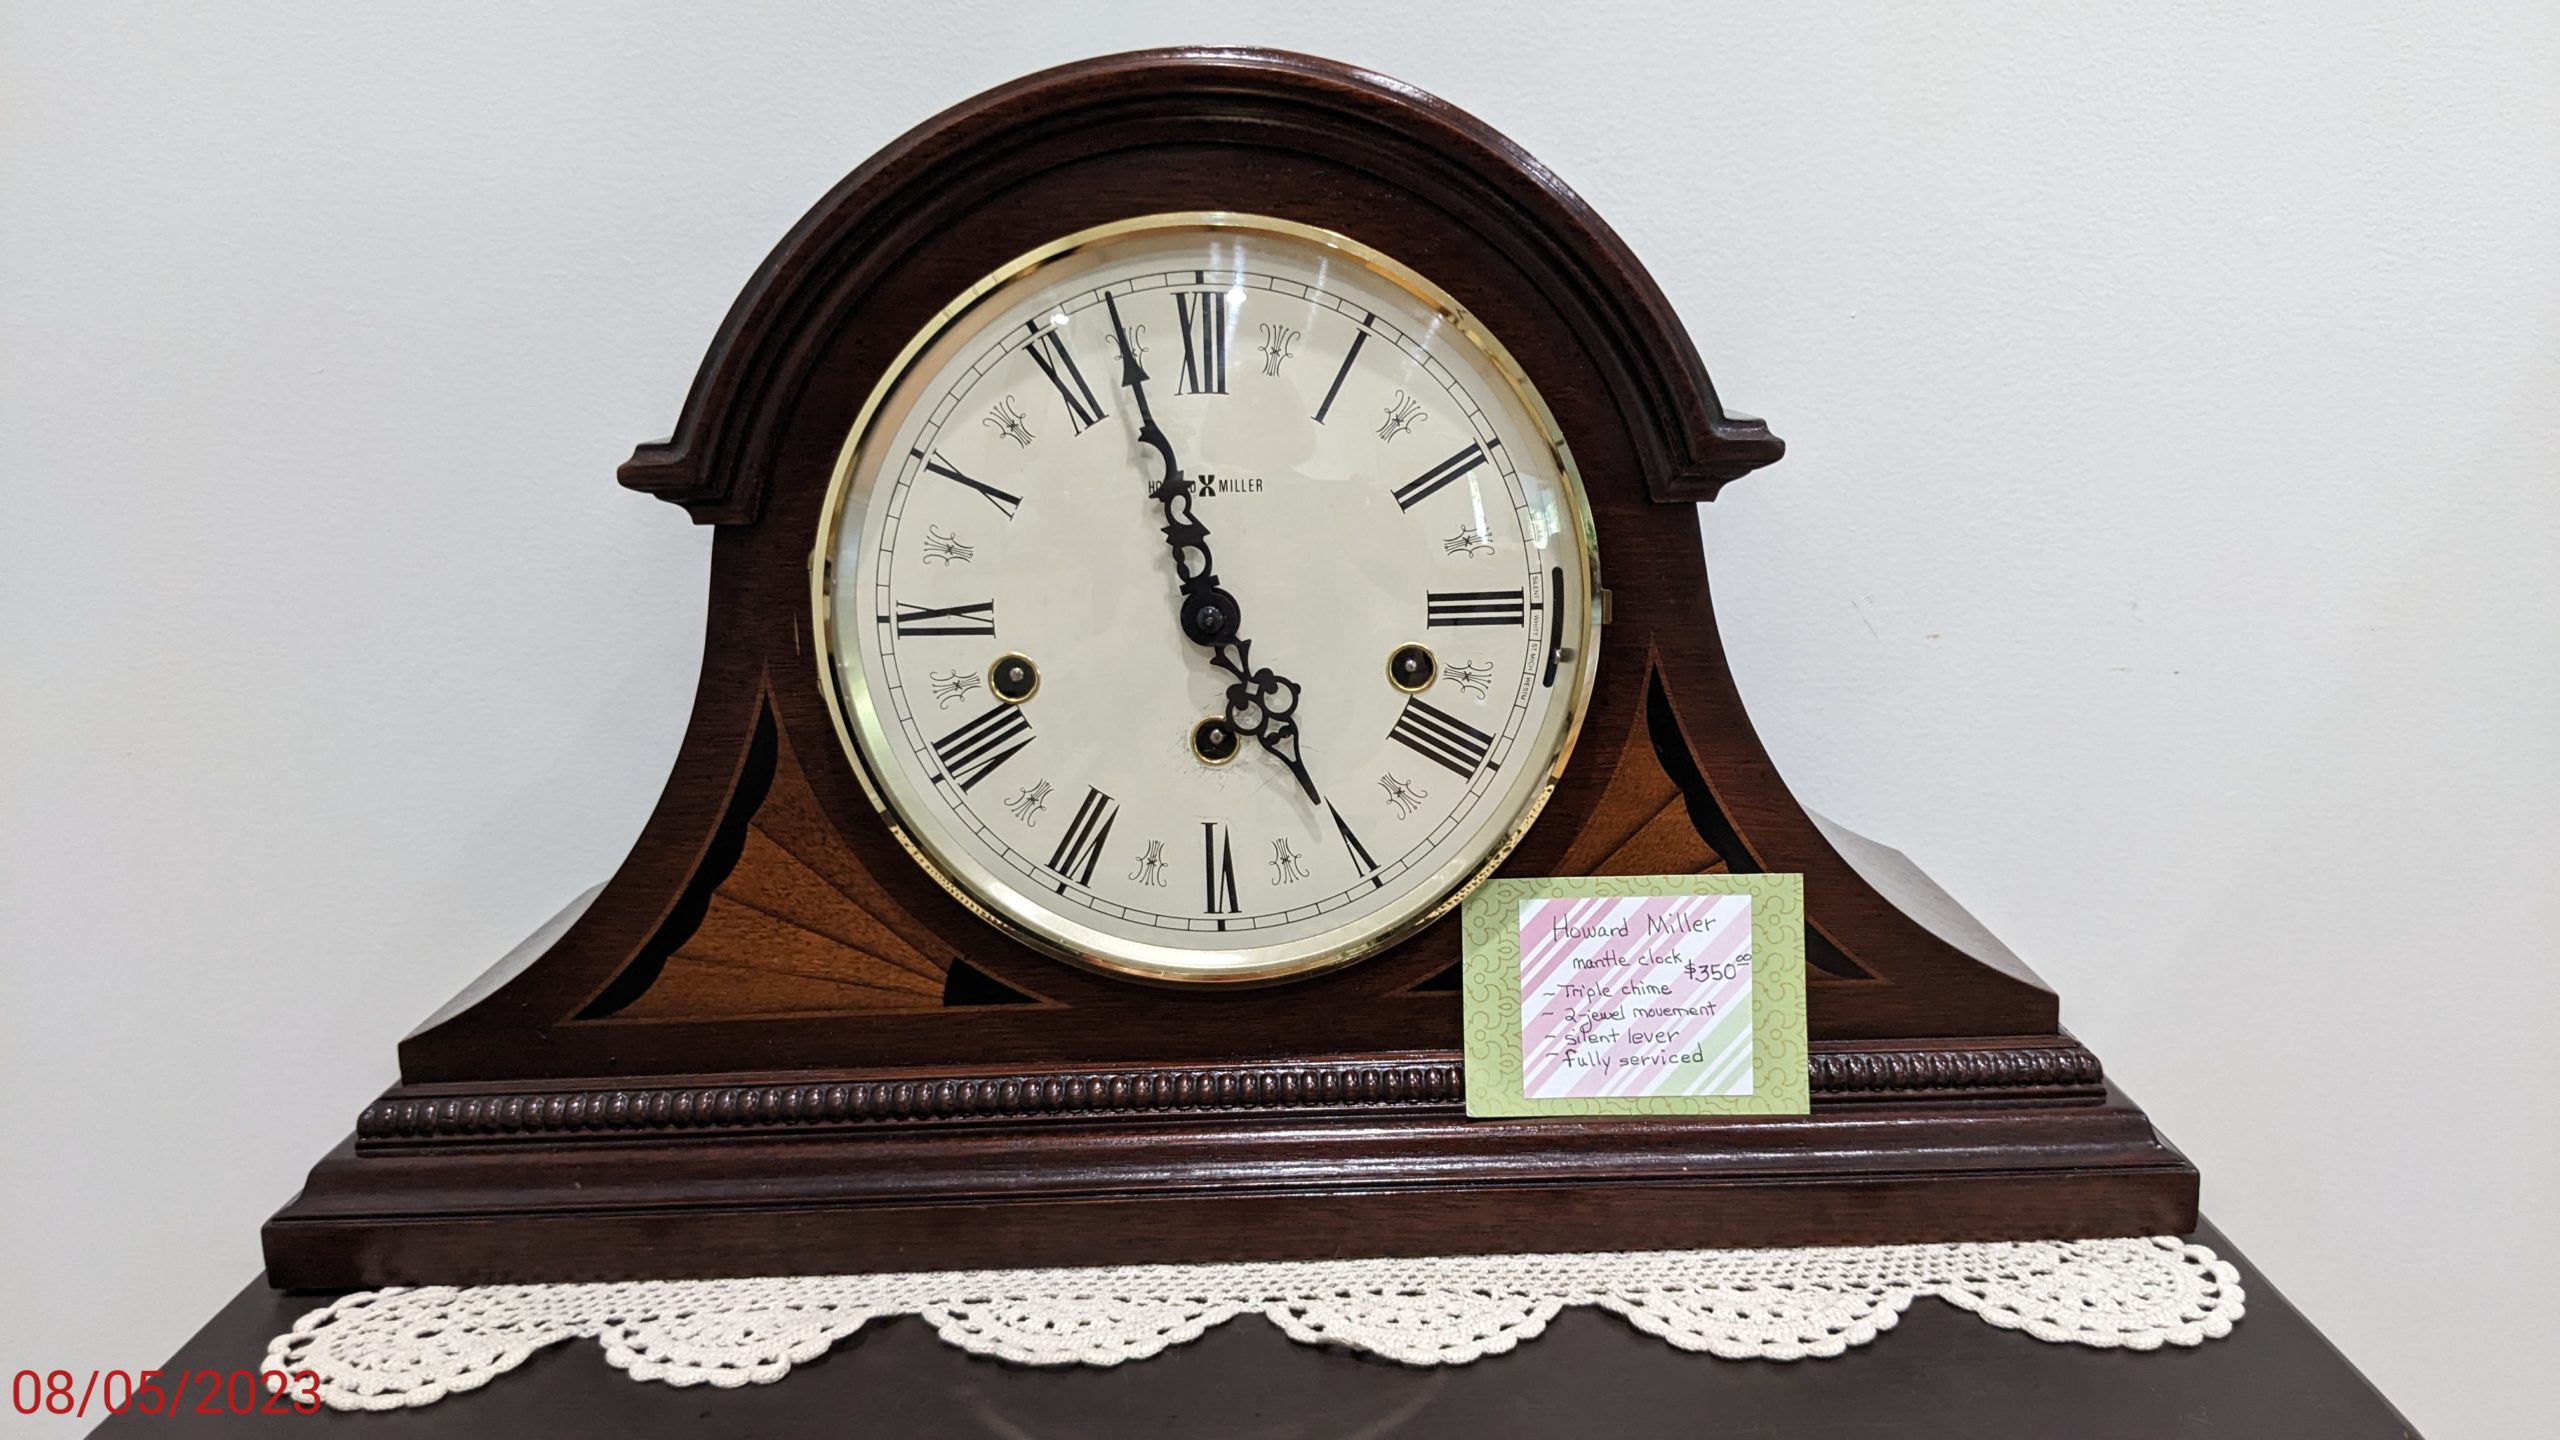 Howard Miller mantle clock — $350